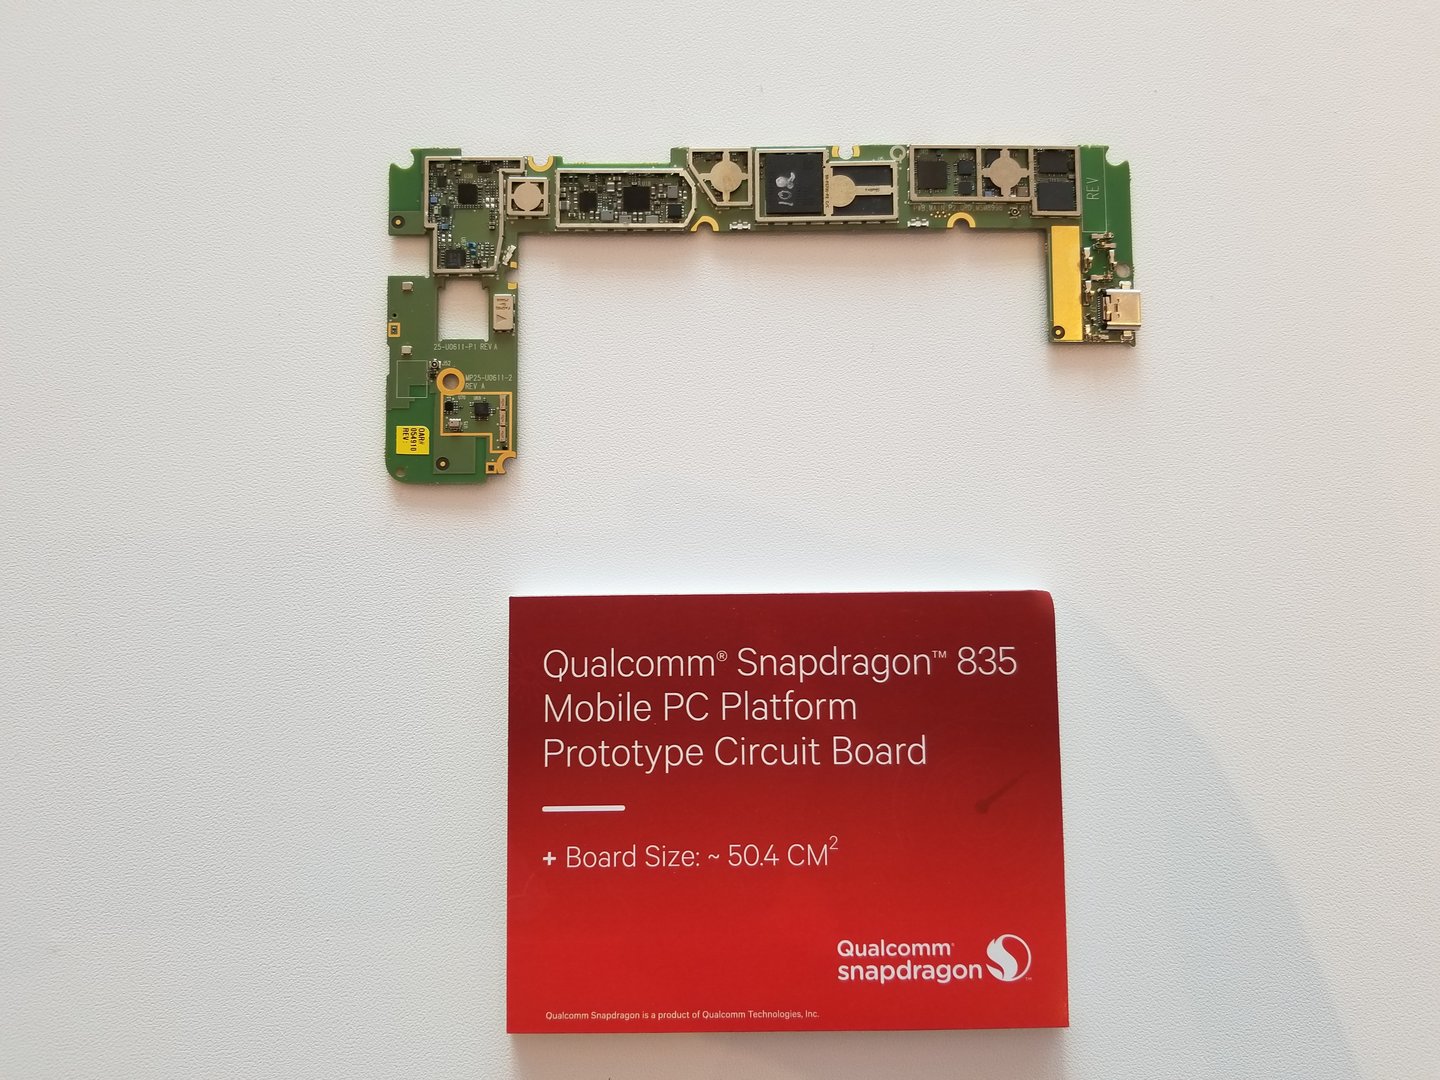 Komplettes PCB mit Qualcomm Snapdragon 835 Mobile PC Platform Prototype Circuit Board